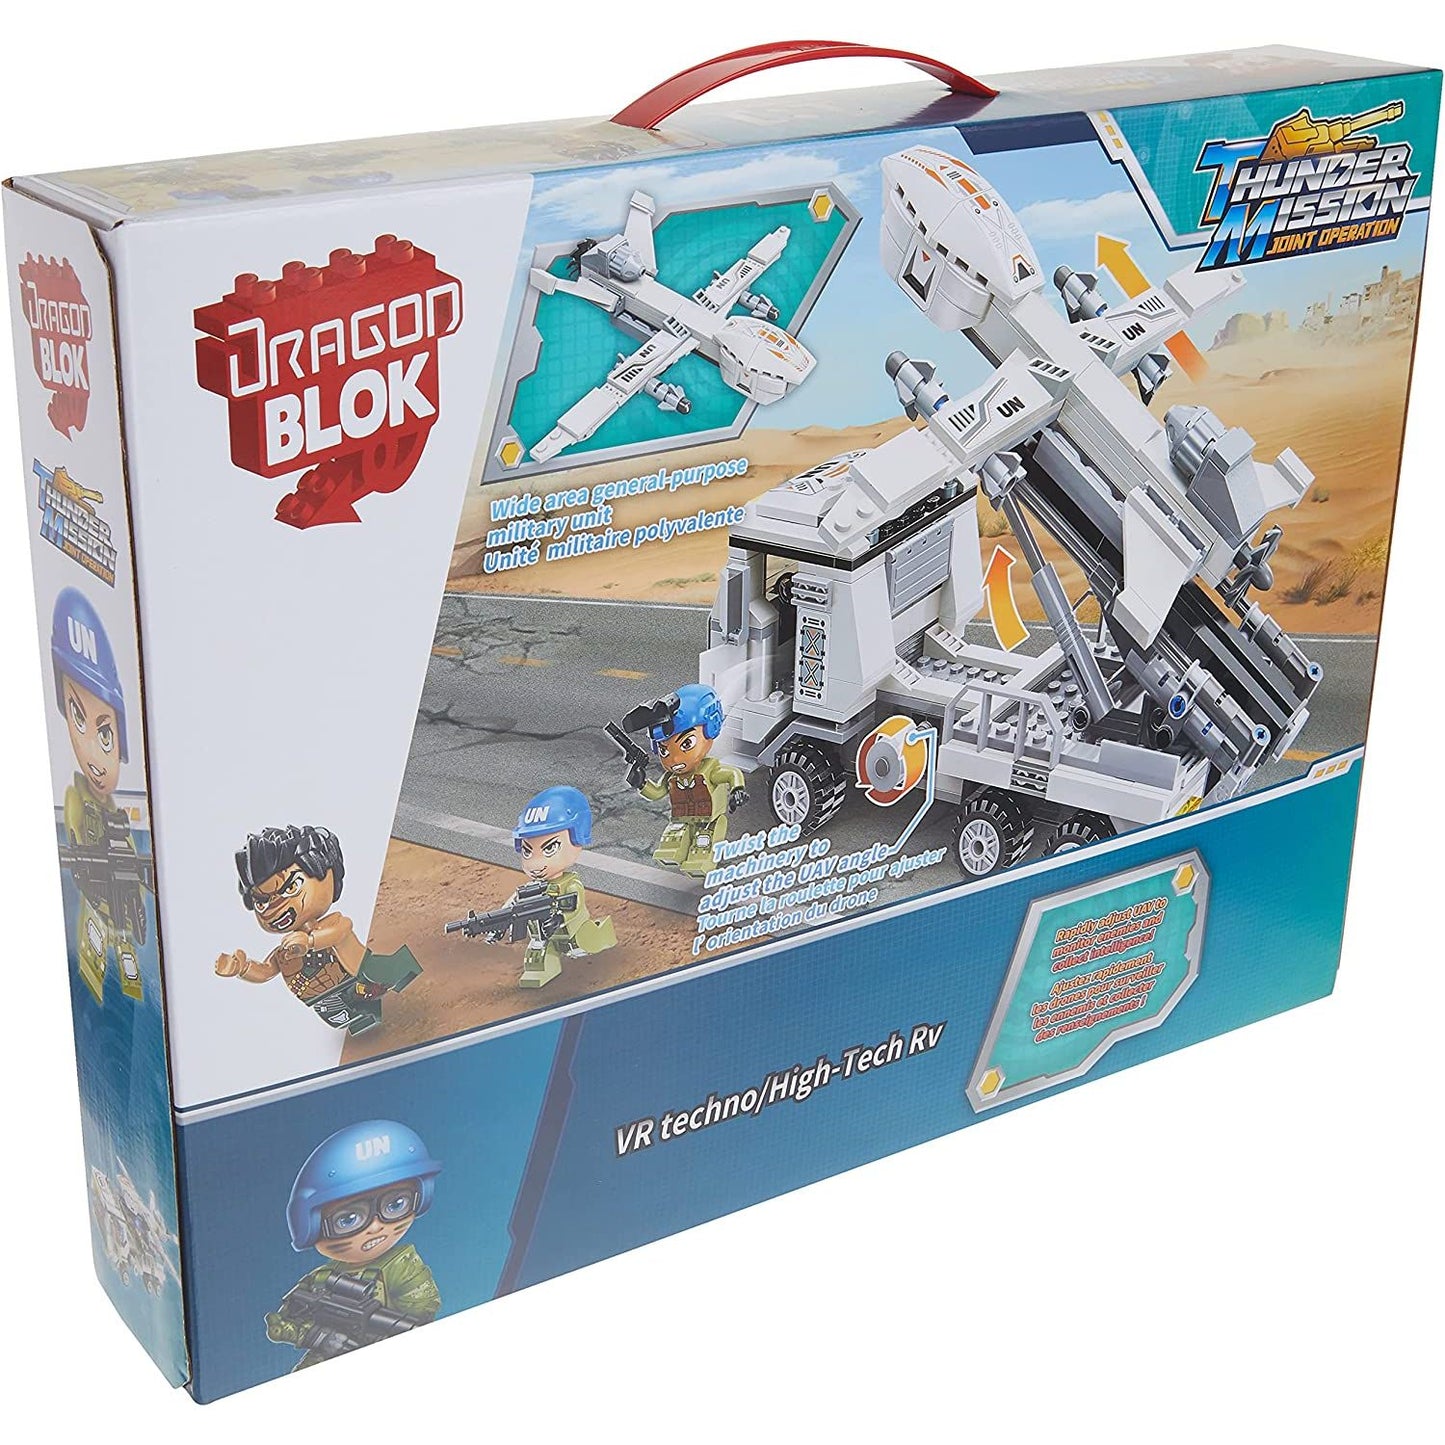 Dragon Blok - Thunder Mission - HIGH-TECH RV Toy